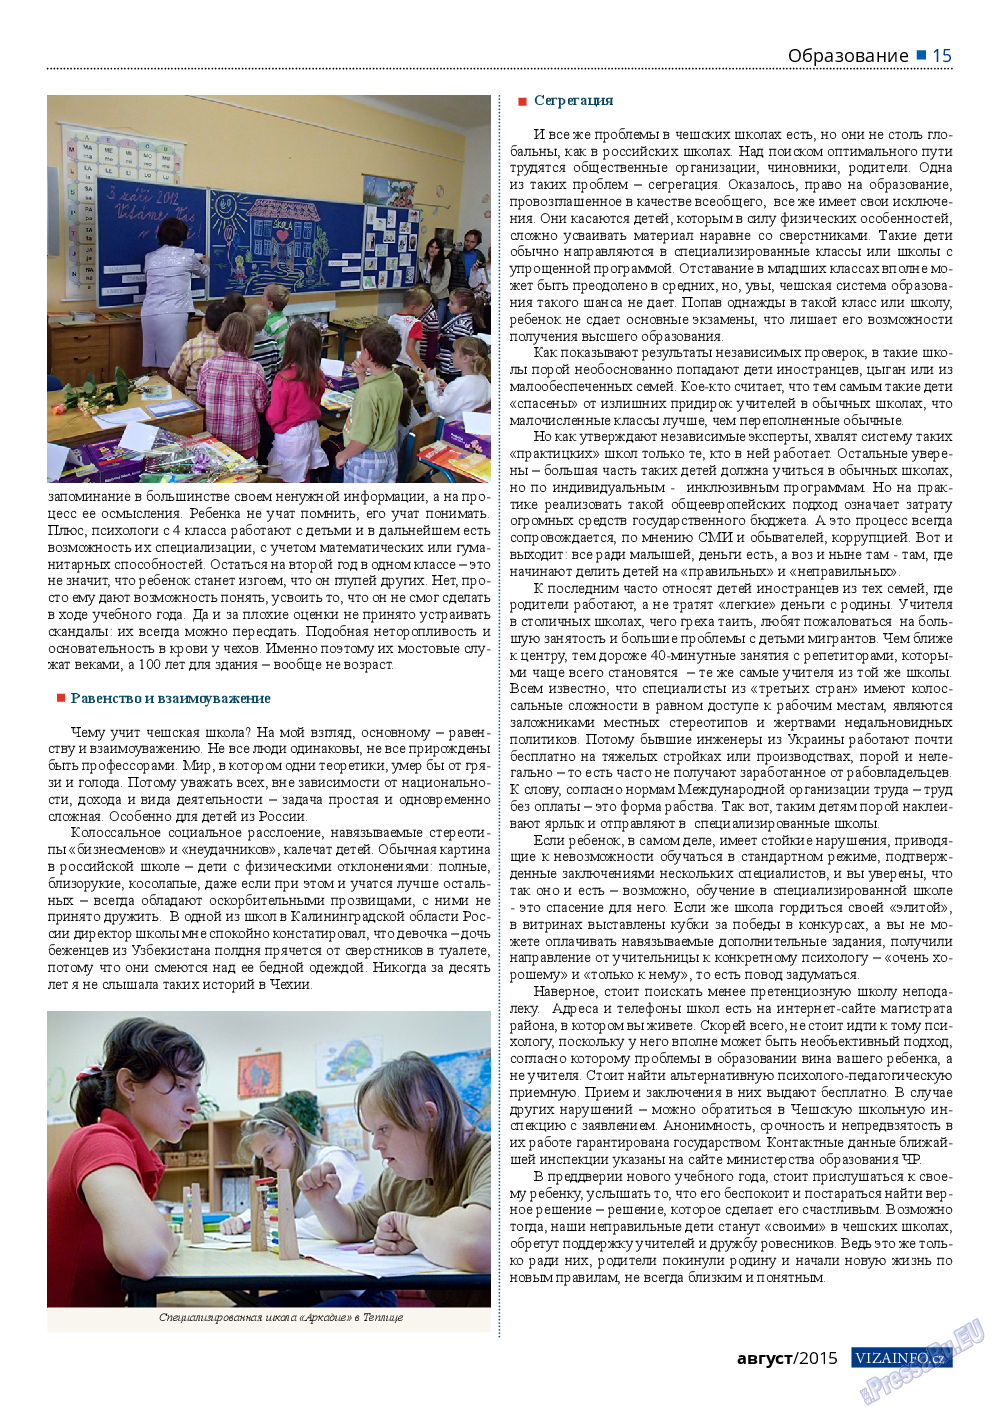 Vizainfo.cz (газета). 2015 год, номер 71, стр. 15